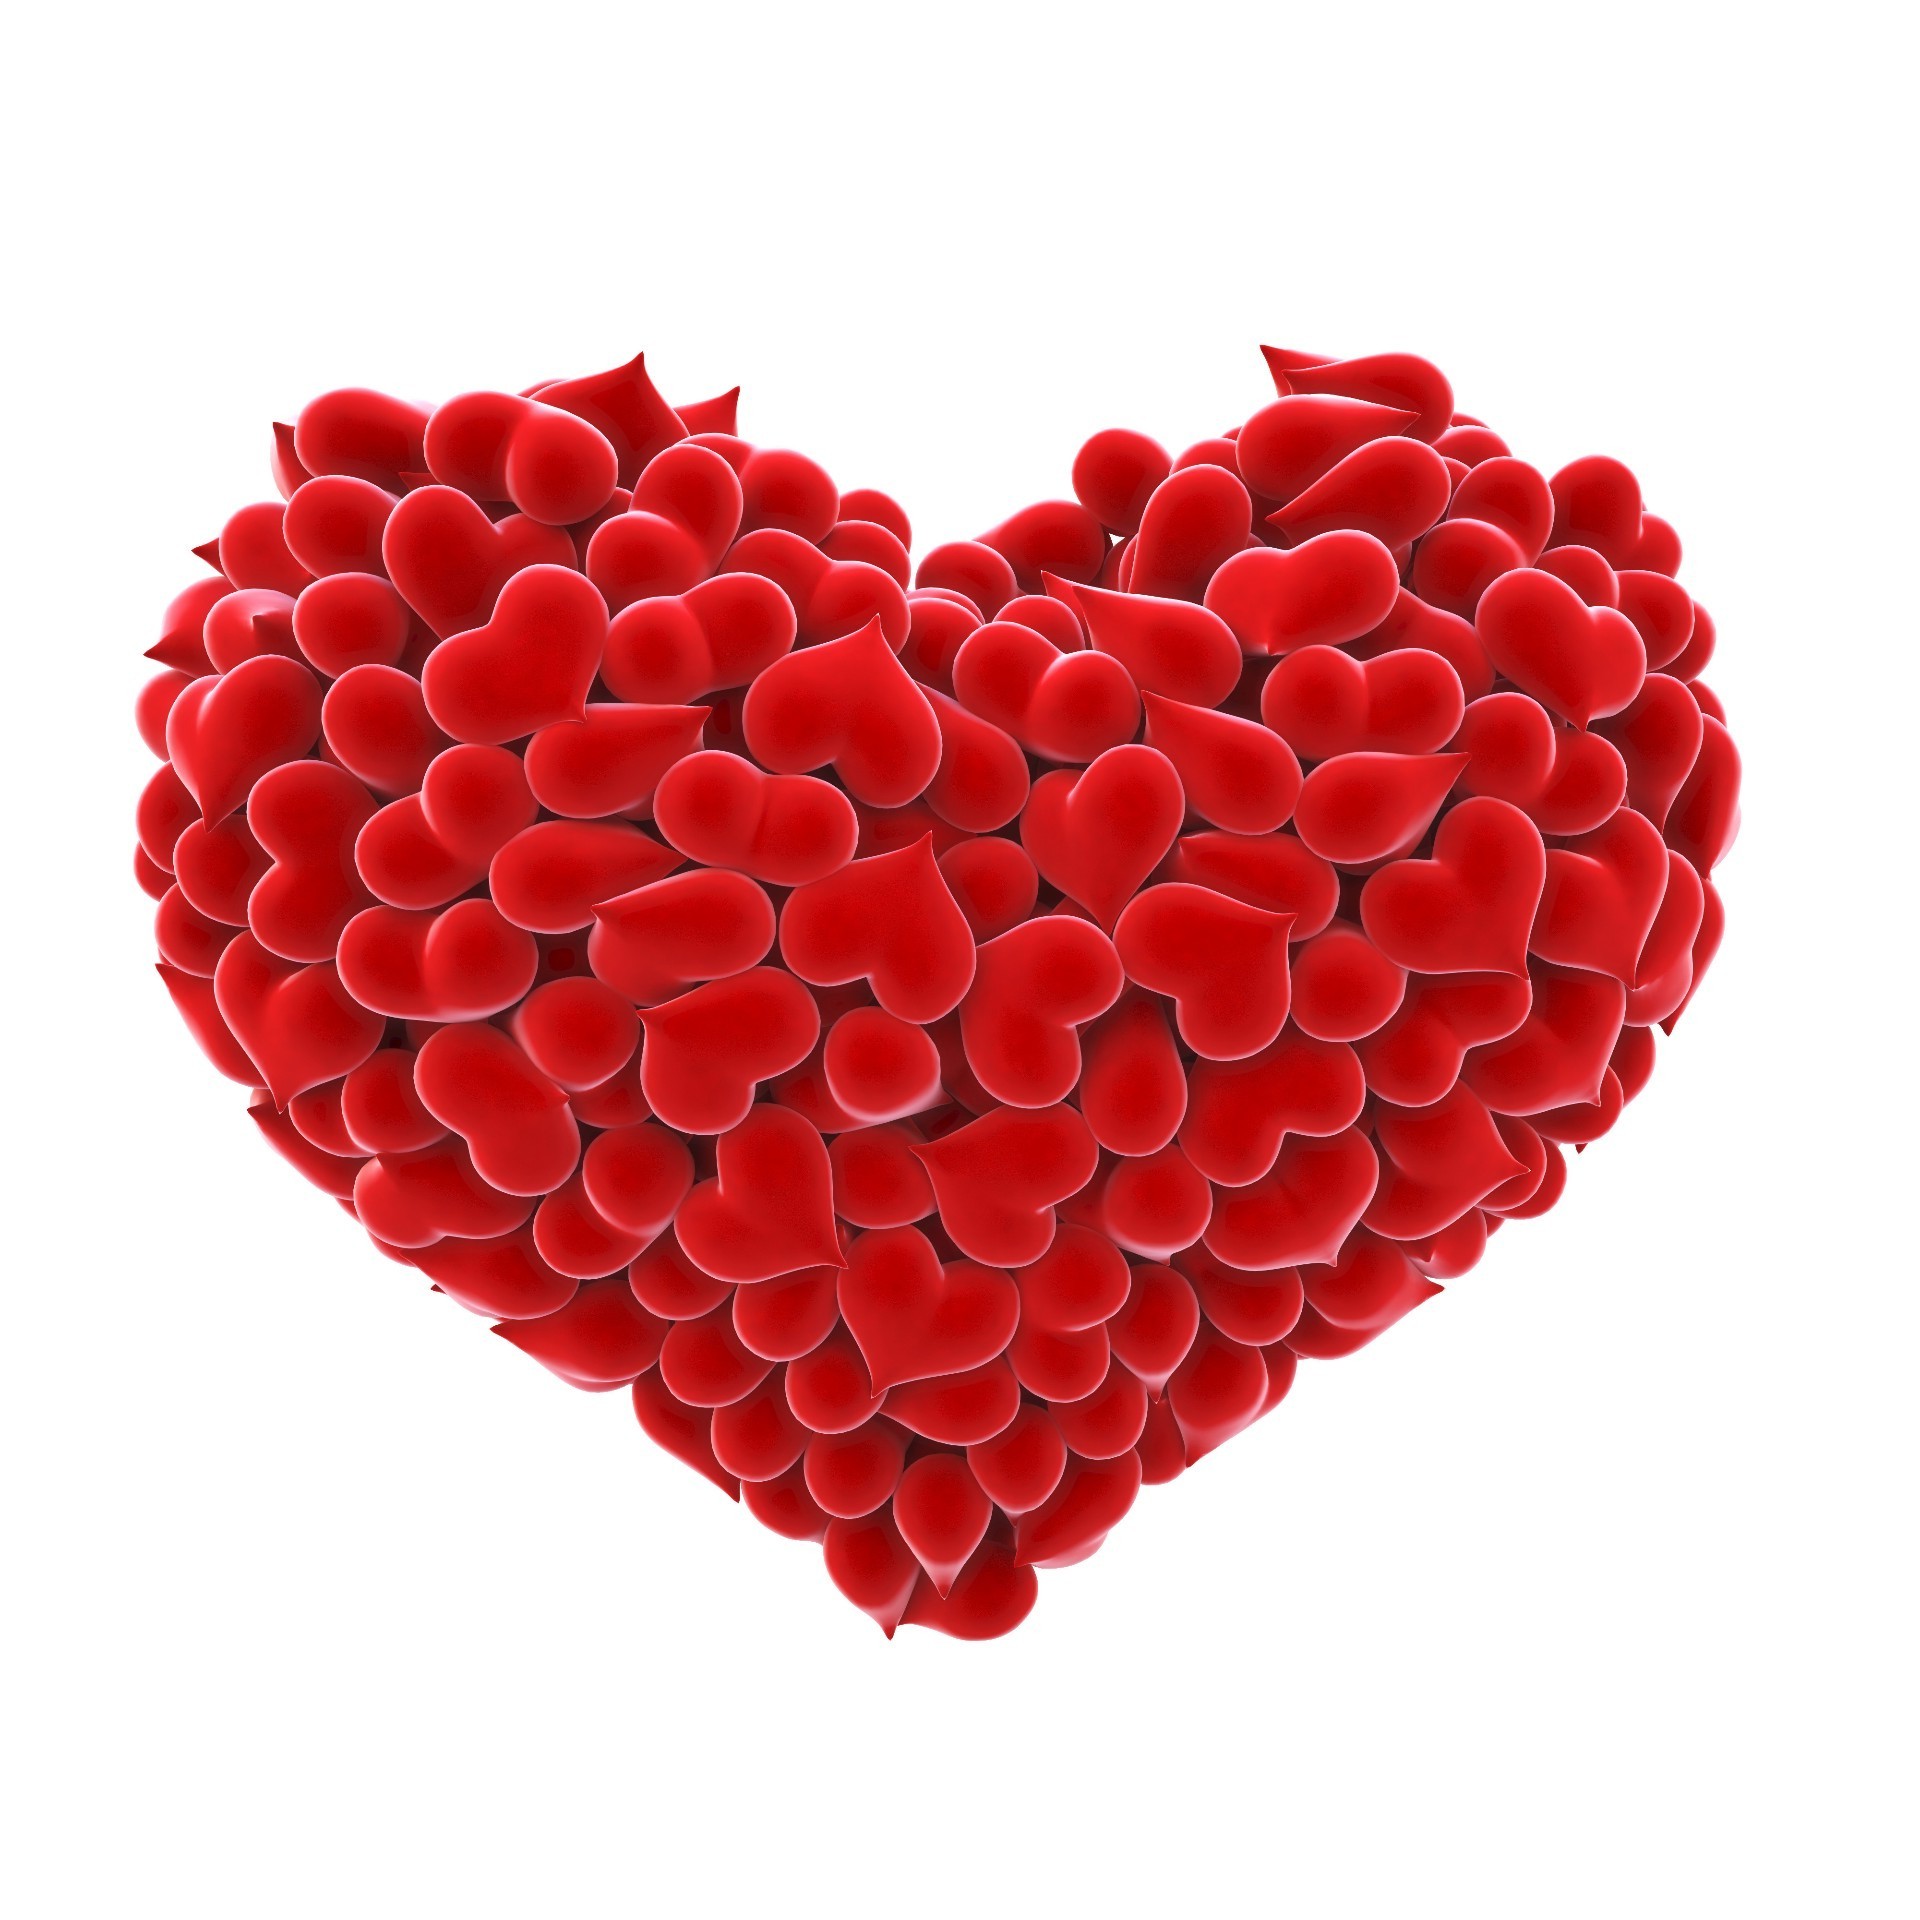 hearts heart desktop isolated love romance health healthy shape romantic symbol food